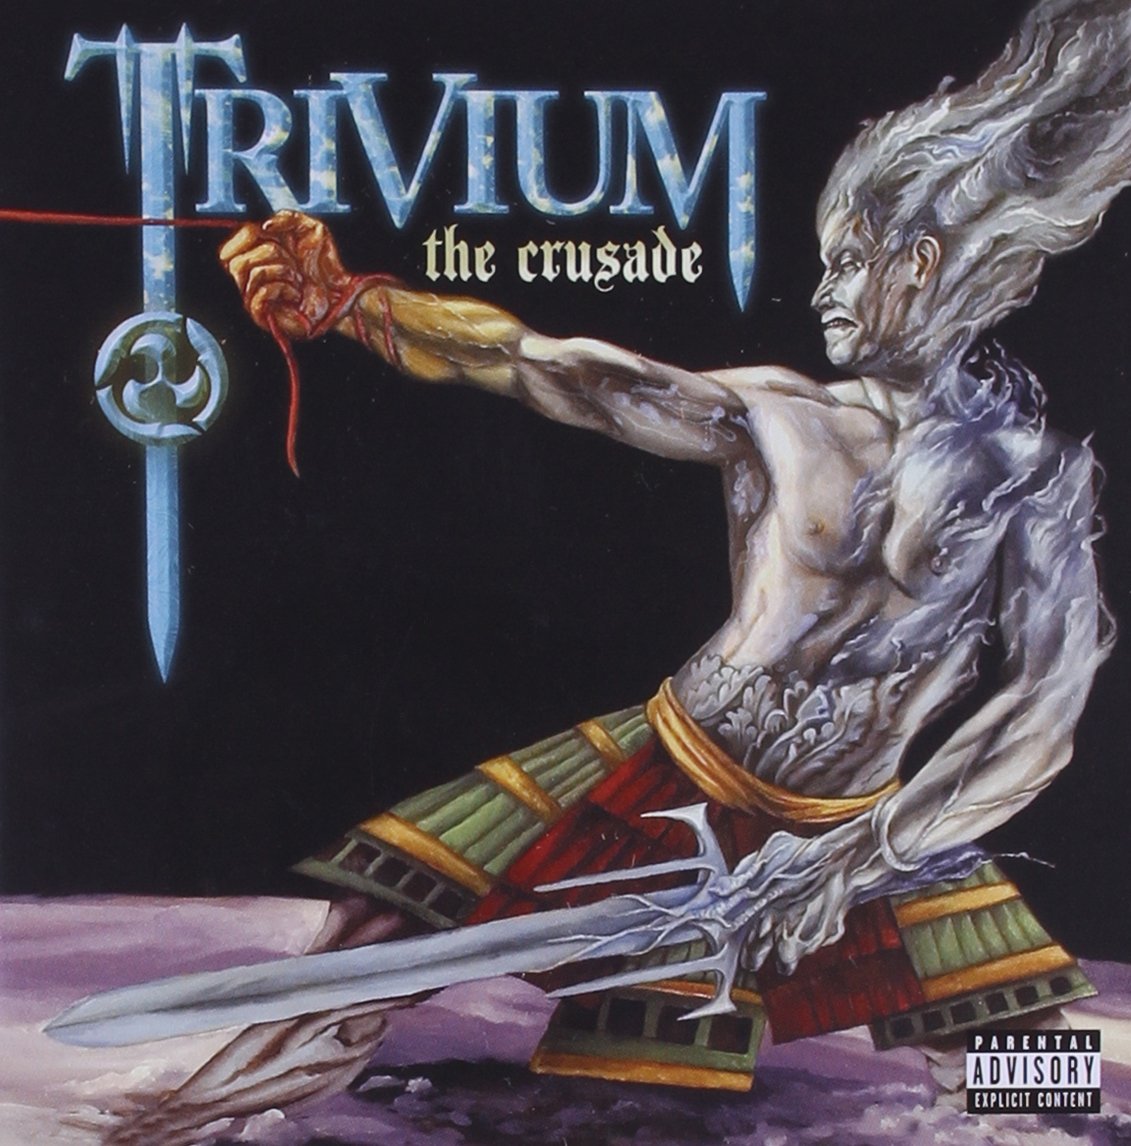 Trivium "The Crusade" CD